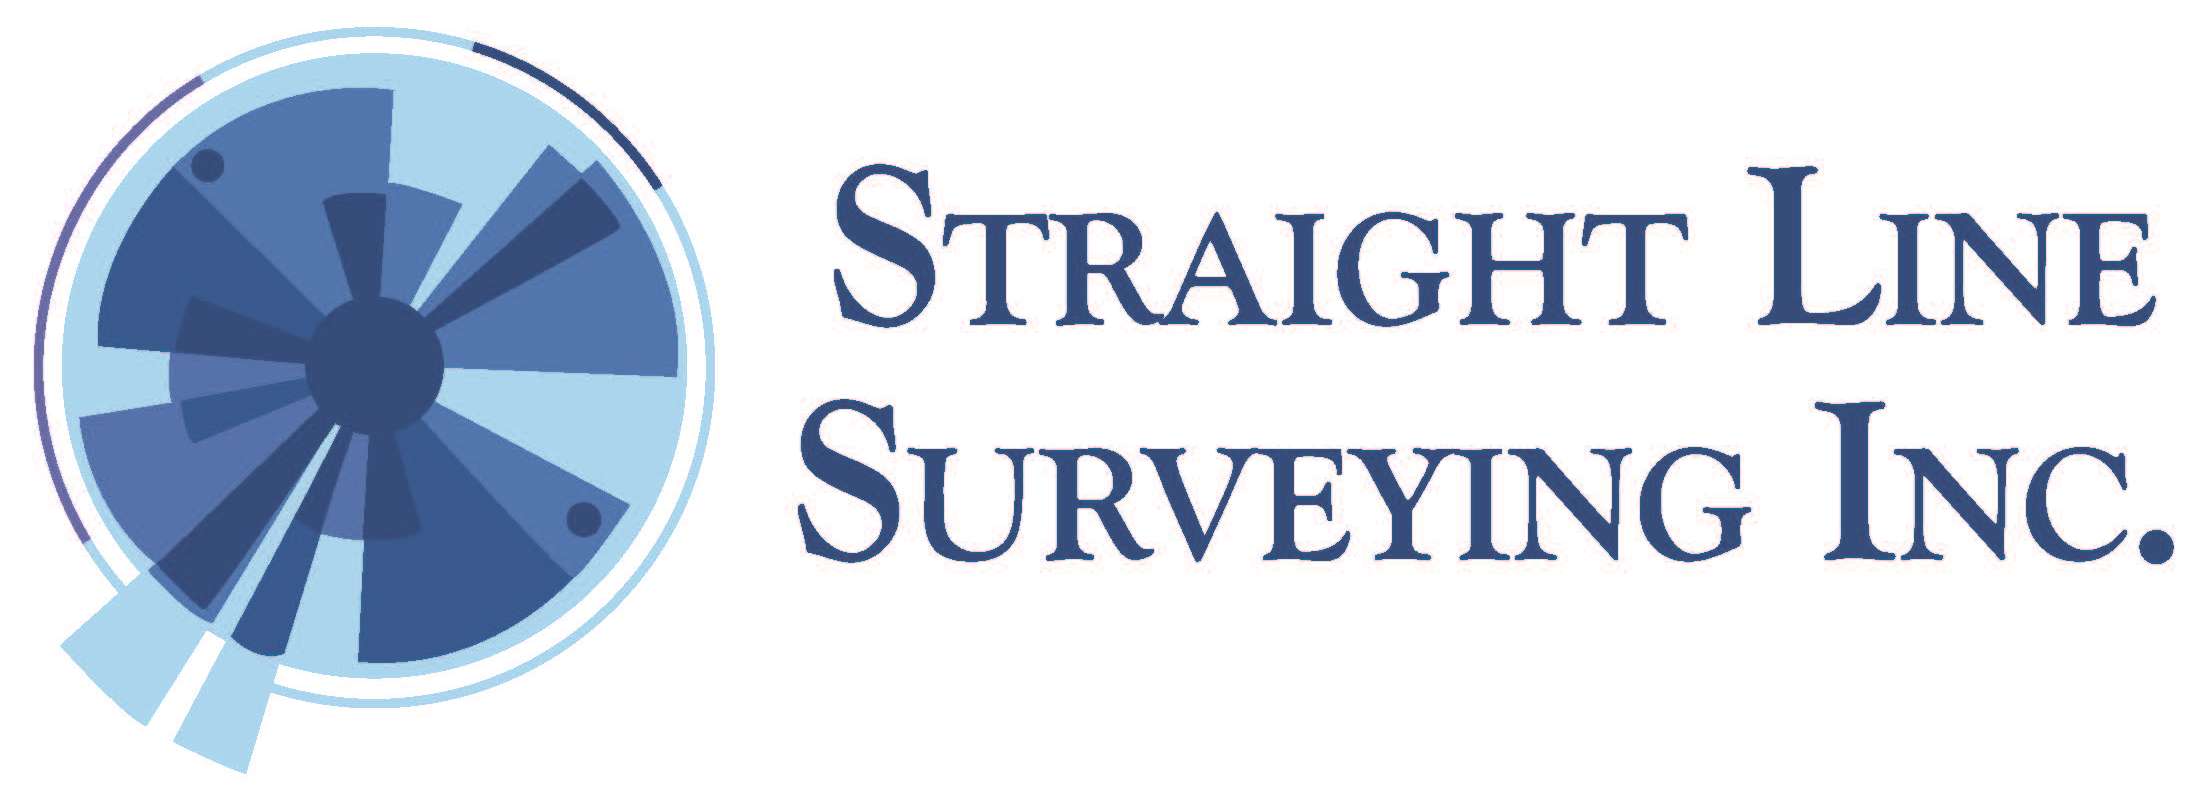 Straight Line Surveying, Inc. Logo